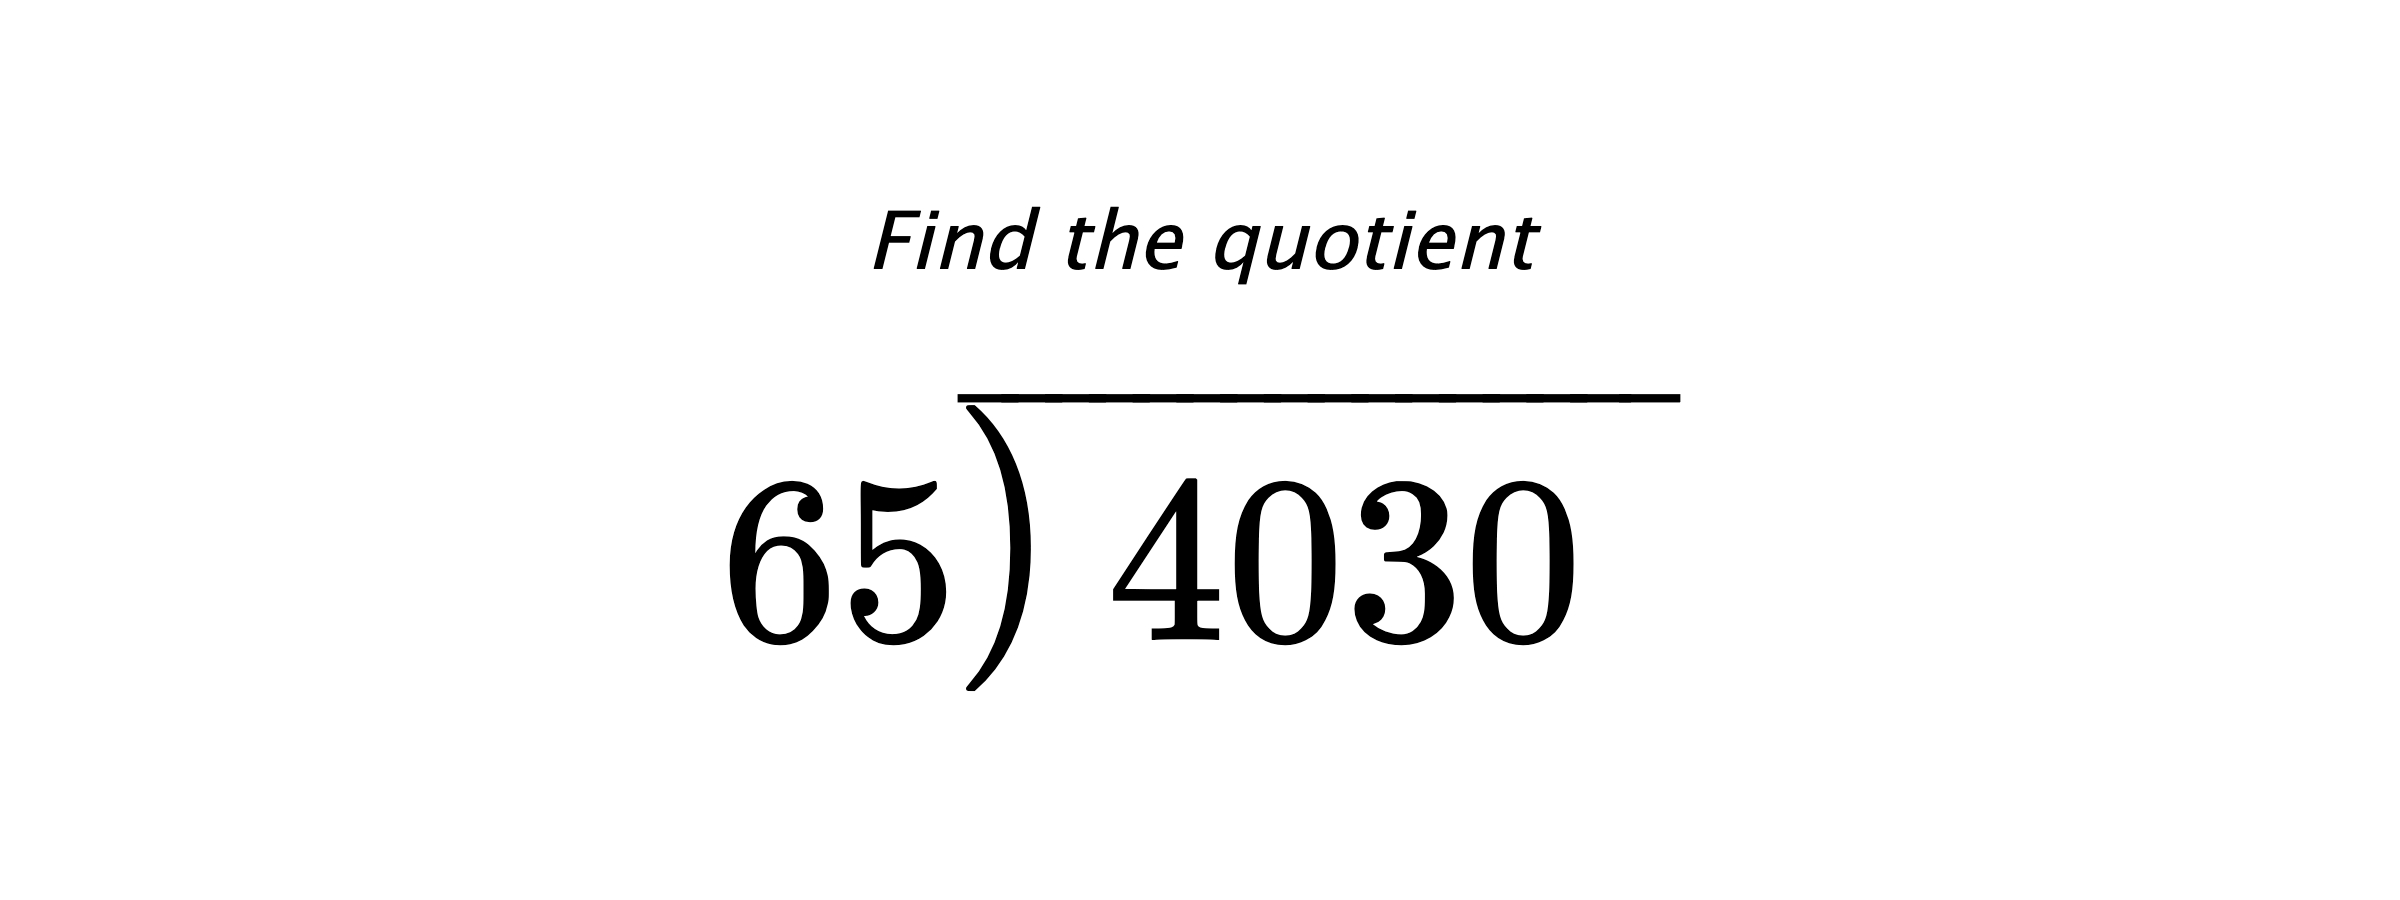 Find the quotient $ 65{\overline{\smash{\raise.3ex\hbox{$\big)$}}\,4030\phantom{)}}} $